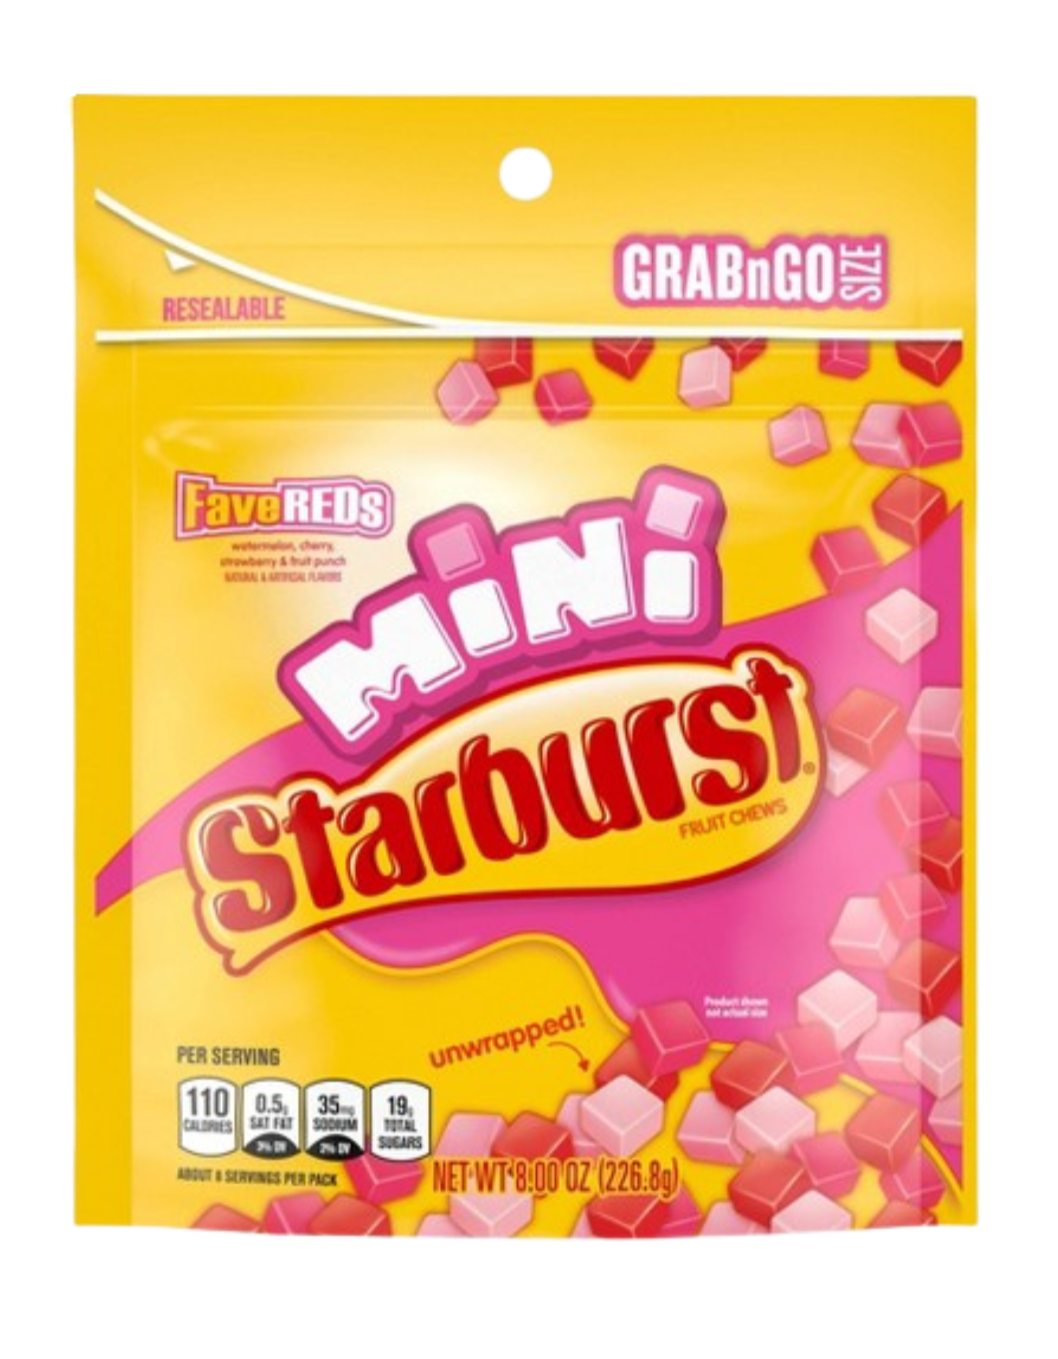 Starburst Favereds Fruit Chewy Candy Grab N Go - 8 oz Bag